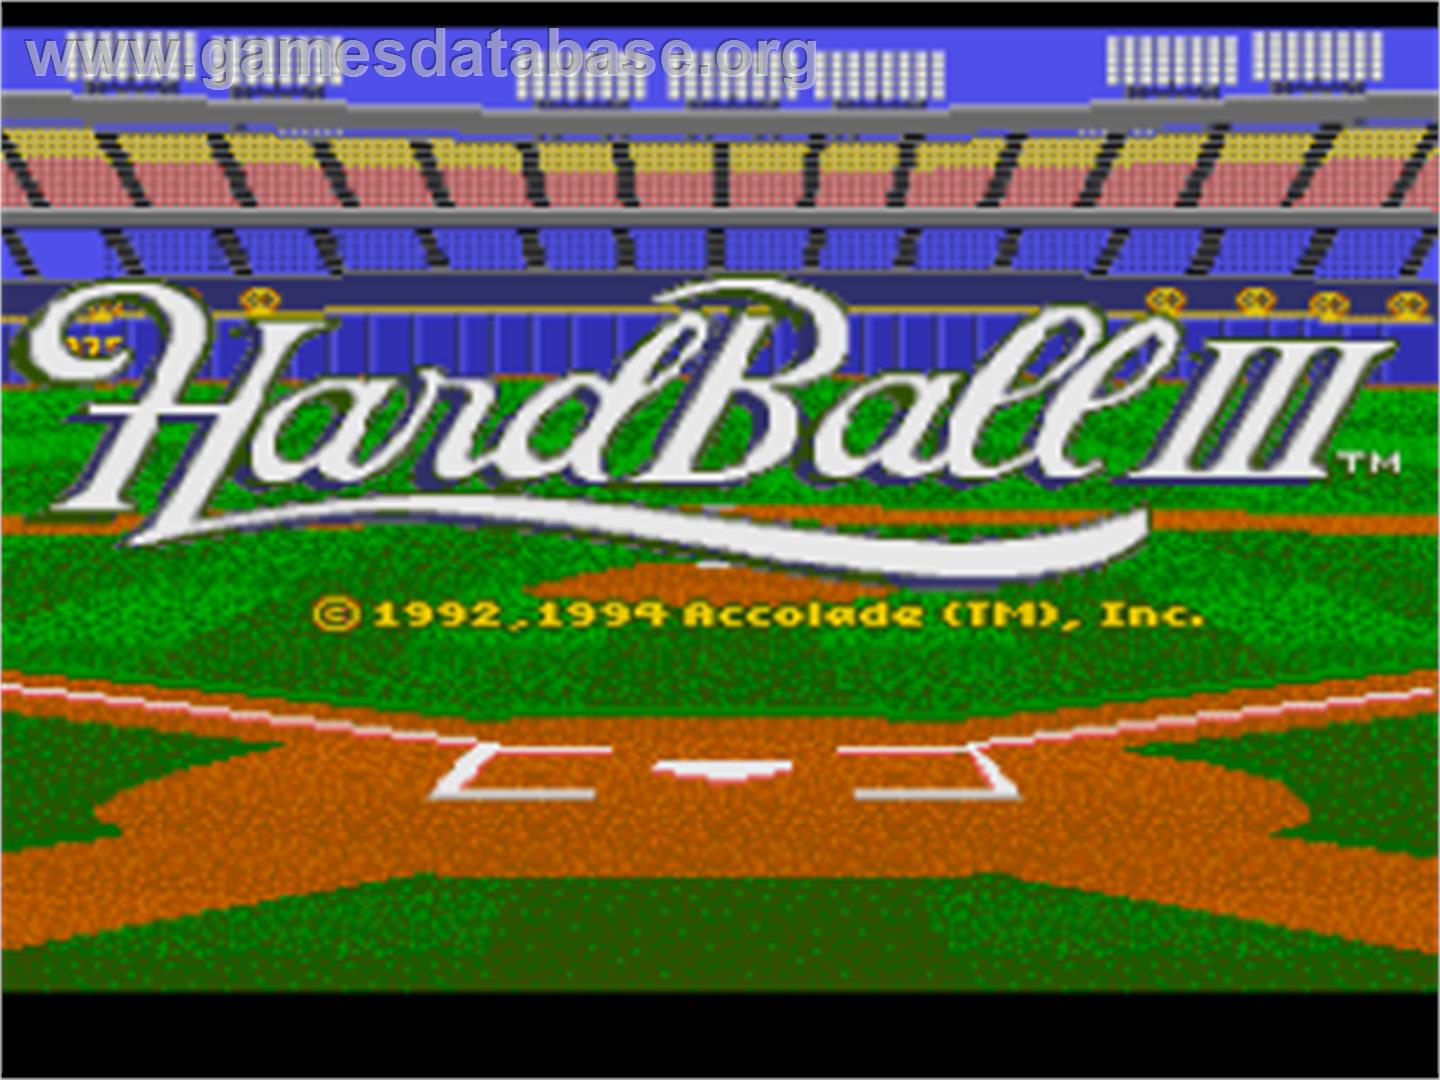 HardBall III - Nintendo SNES - Artwork - Title Screen